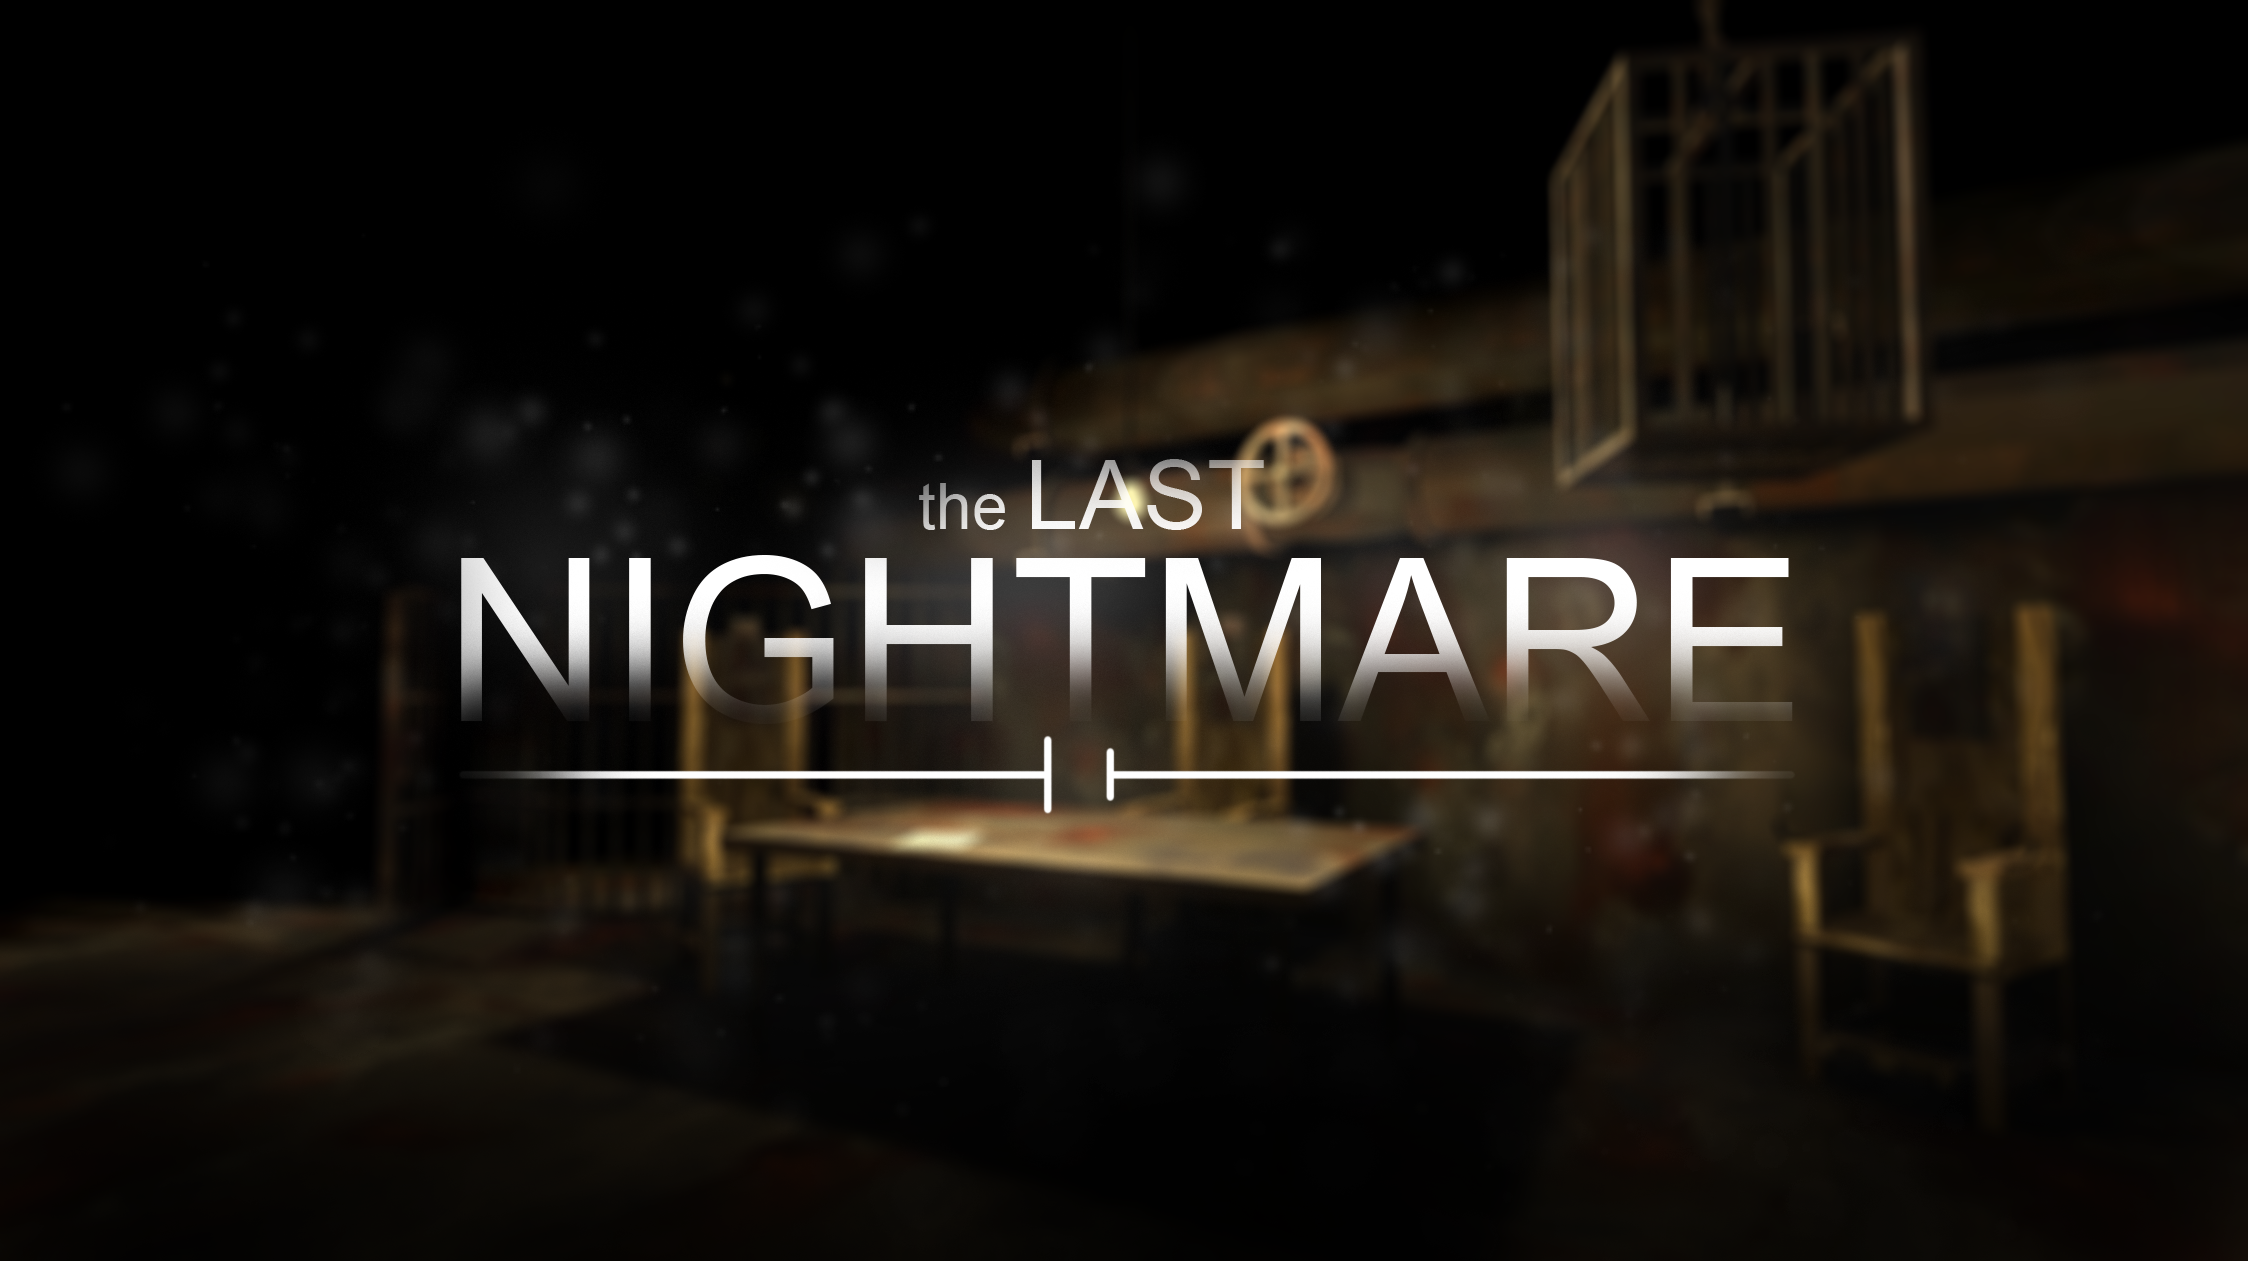 The Last Nightmare